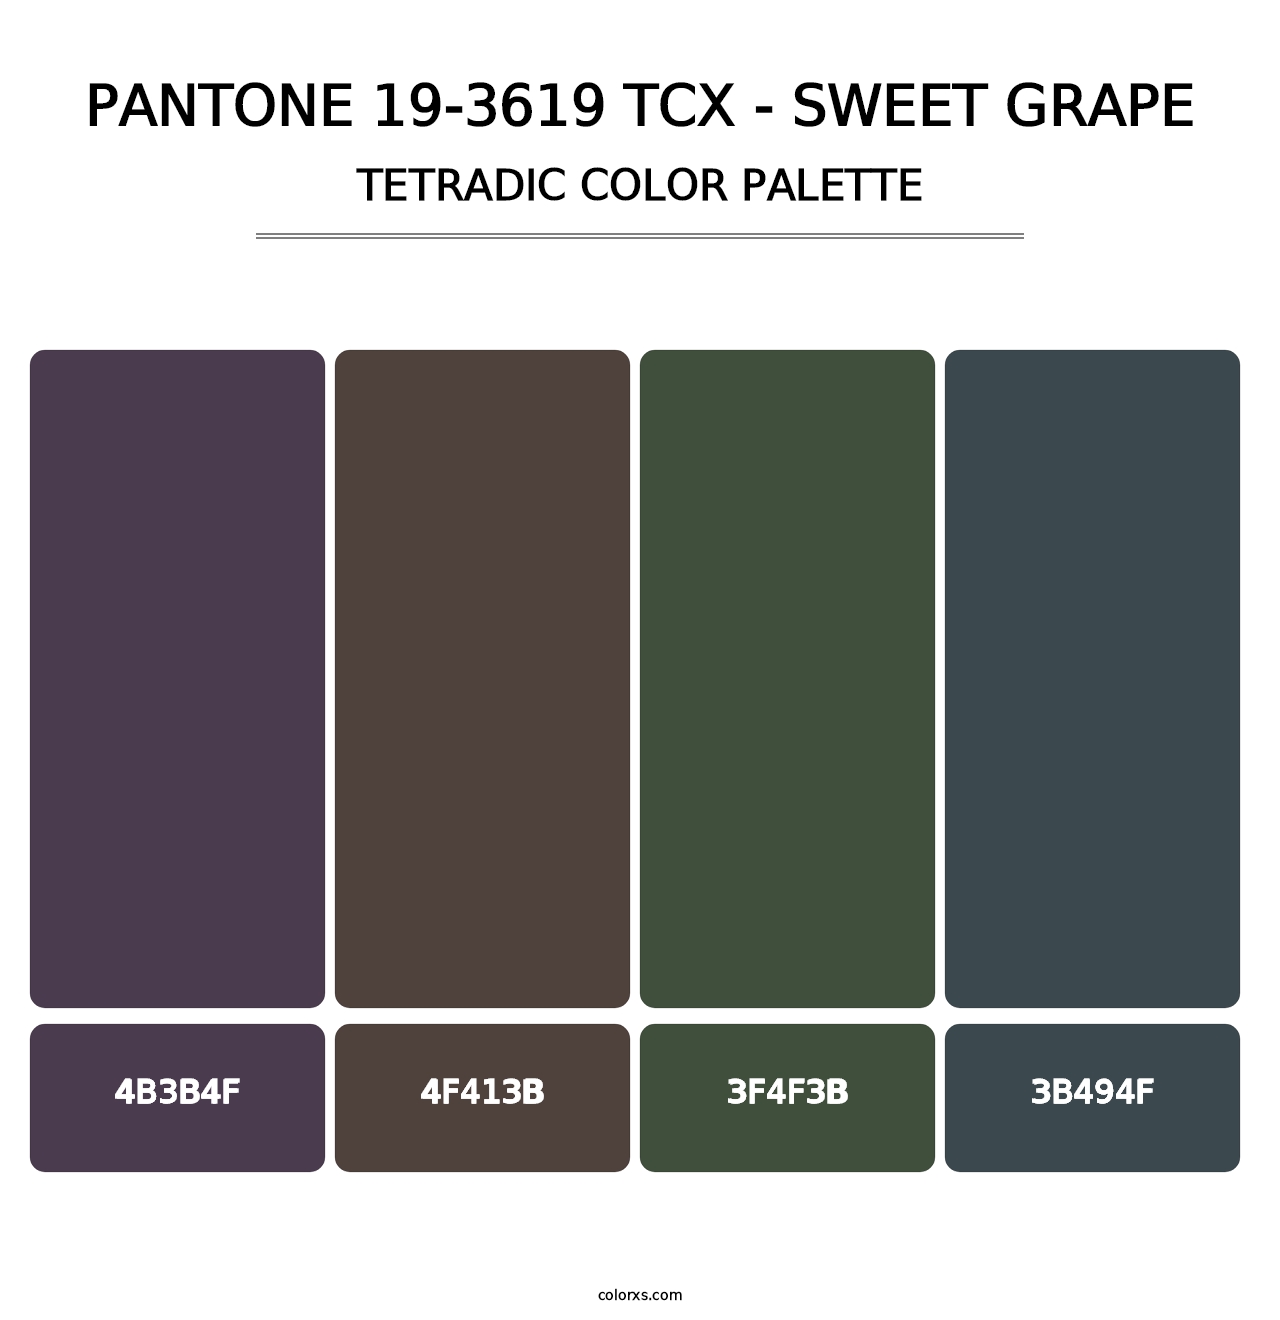 PANTONE 19-3619 TCX - Sweet Grape - Tetradic Color Palette